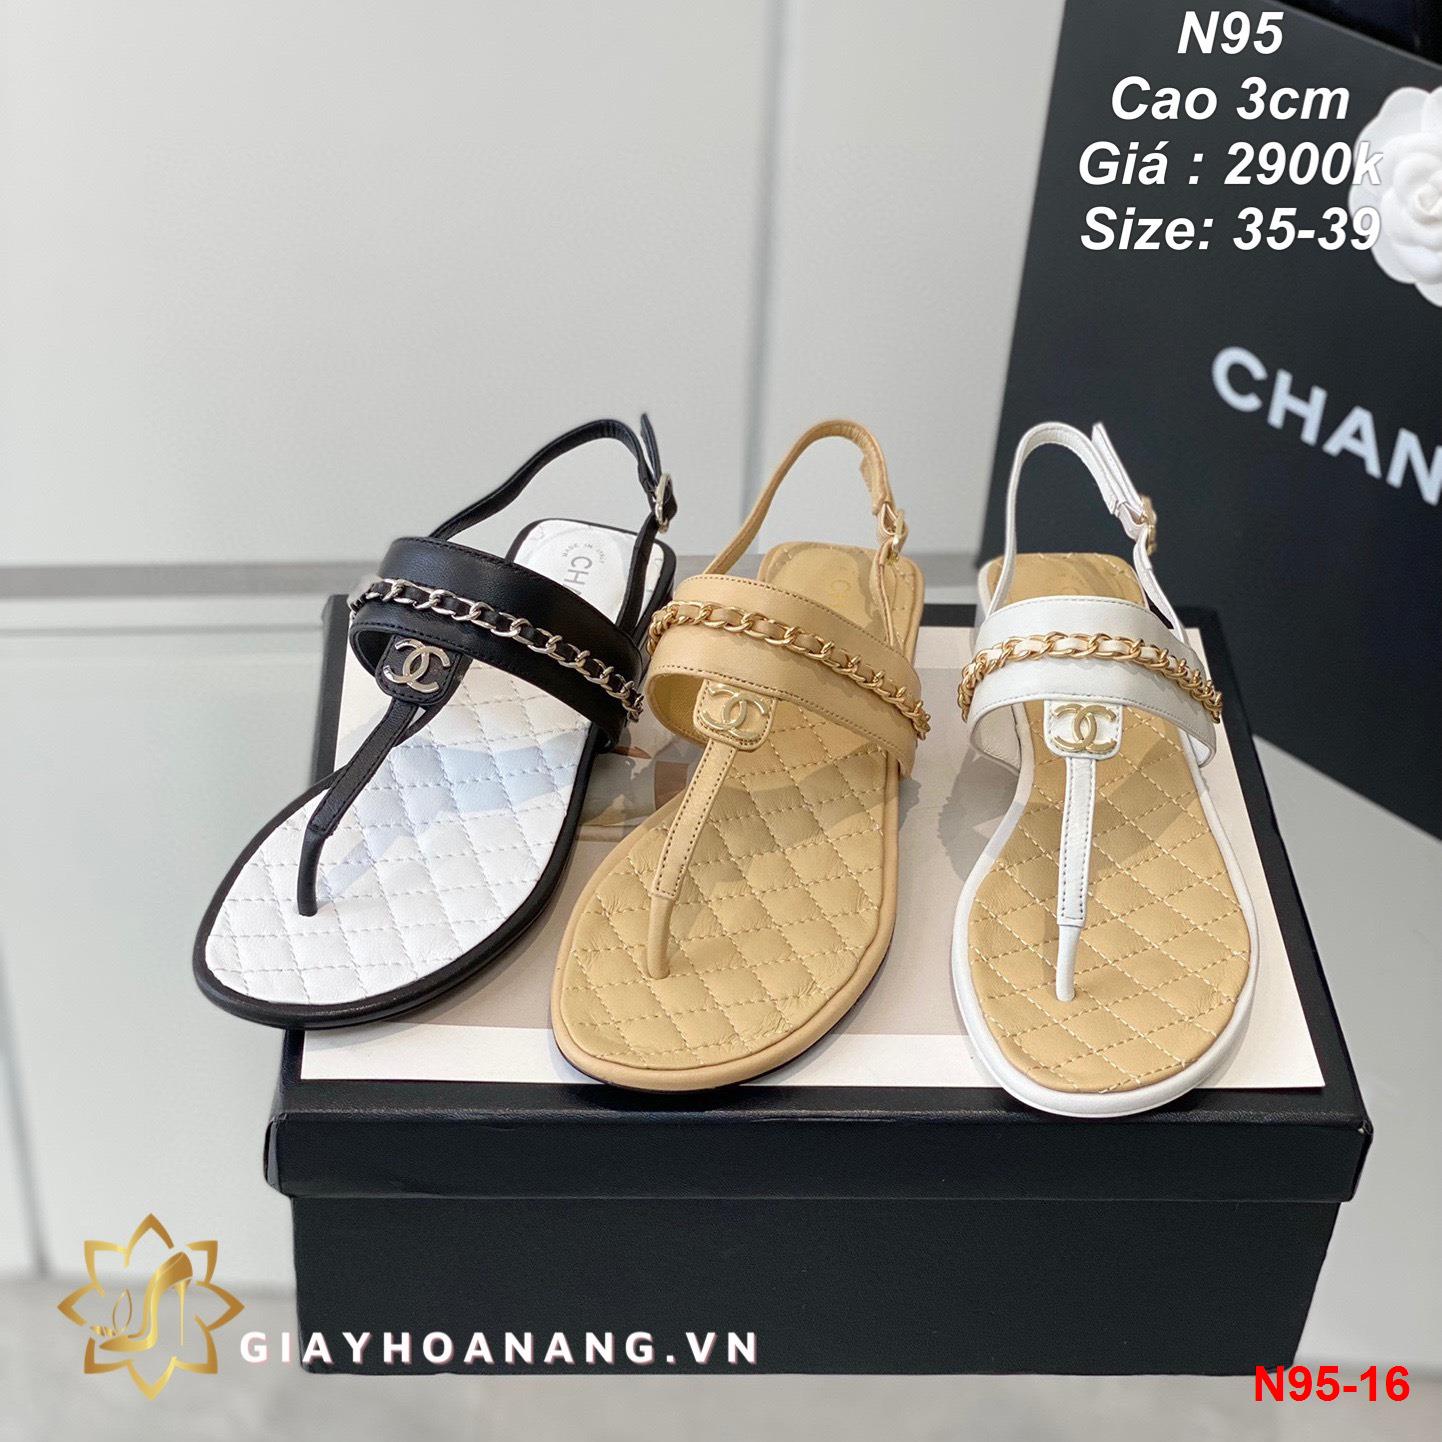 N95-16 Chanel sandal cao 3cm siêu cấp